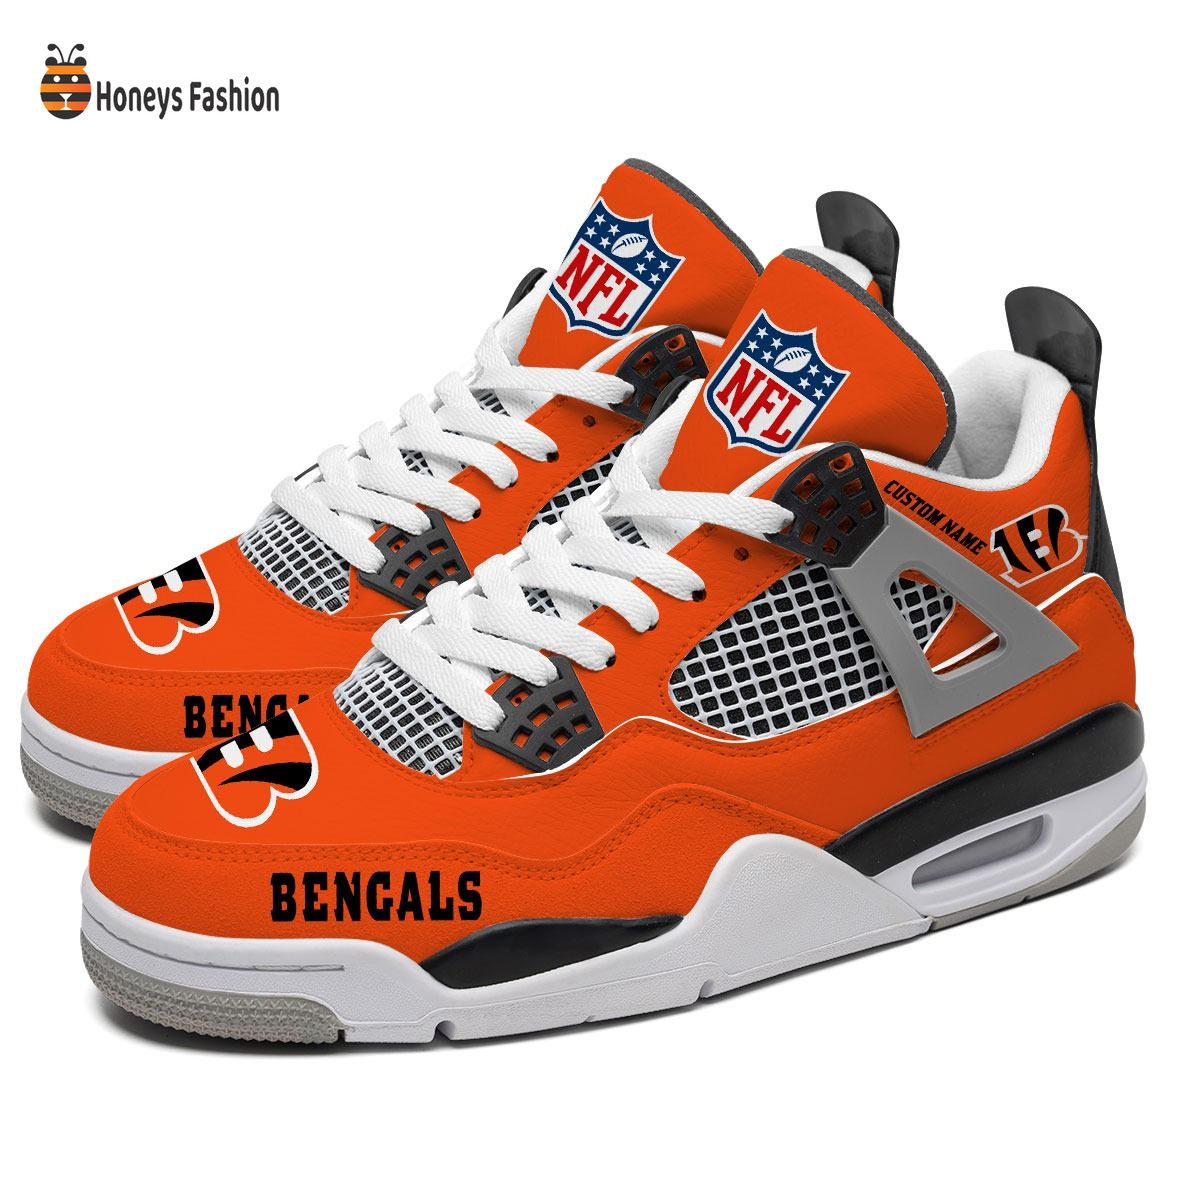 Cincinnati Bengals NFL Air Jordan 4 Shoes